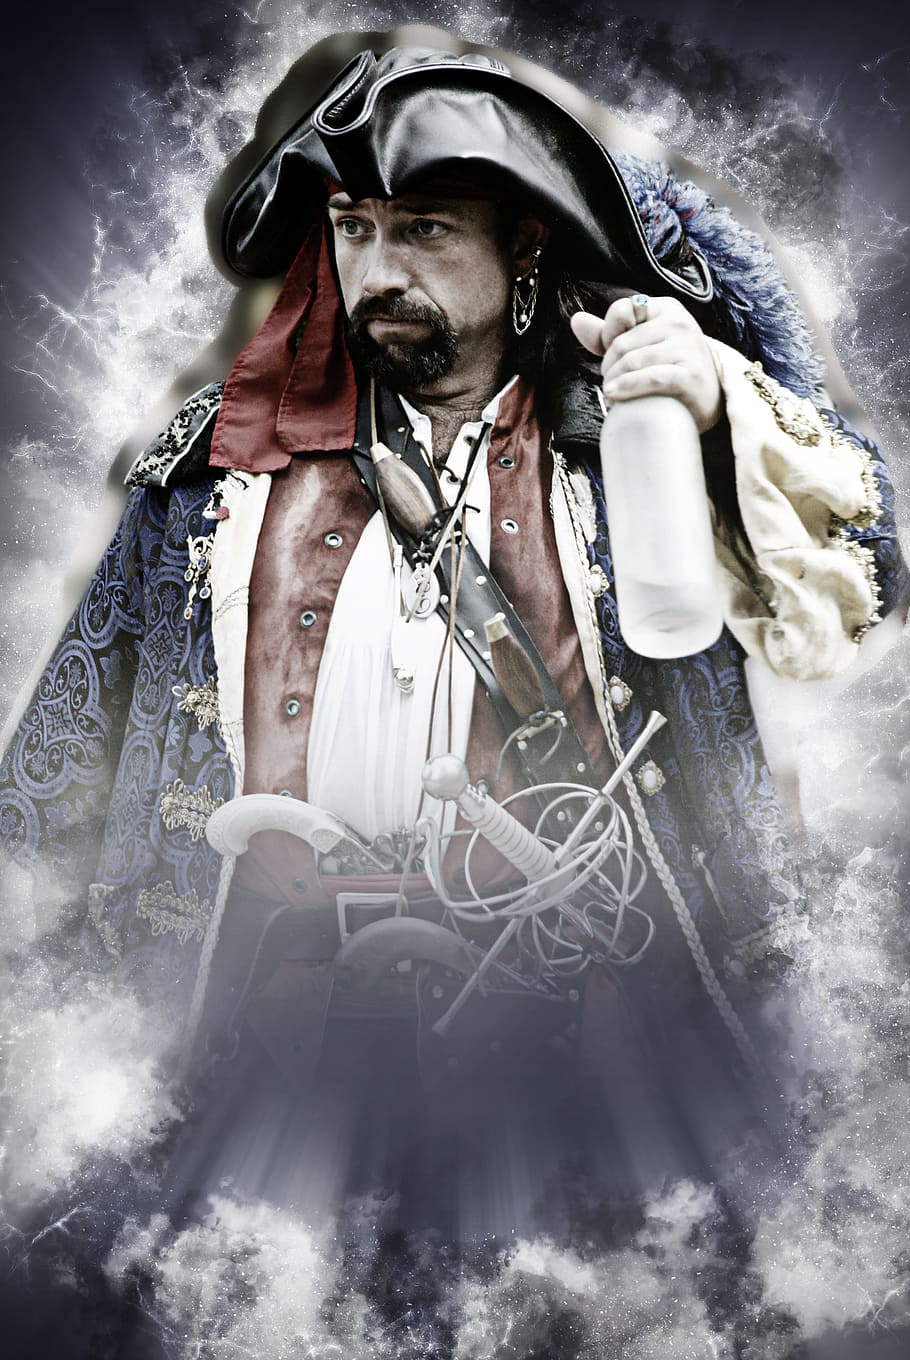 Pirate costume 1080P, 2K, 4K, 5K HD wallpapers free download ...